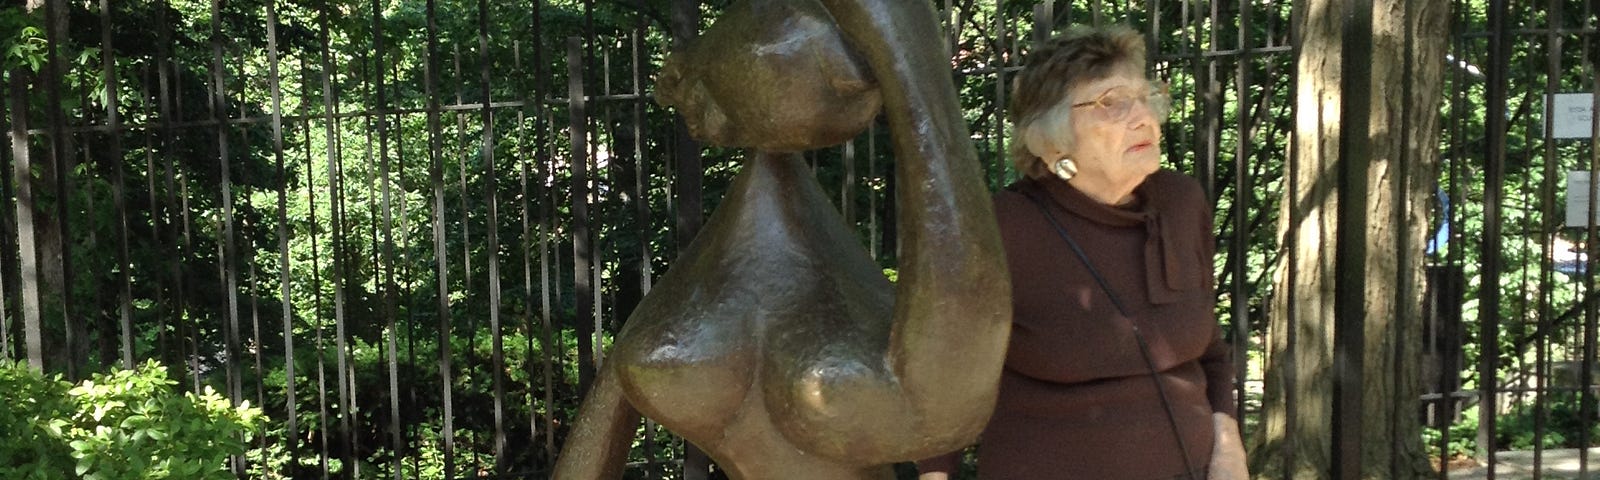 Elderly woman standing next to Henri Lauren outside sculpture at the Baltimore Museum of Art